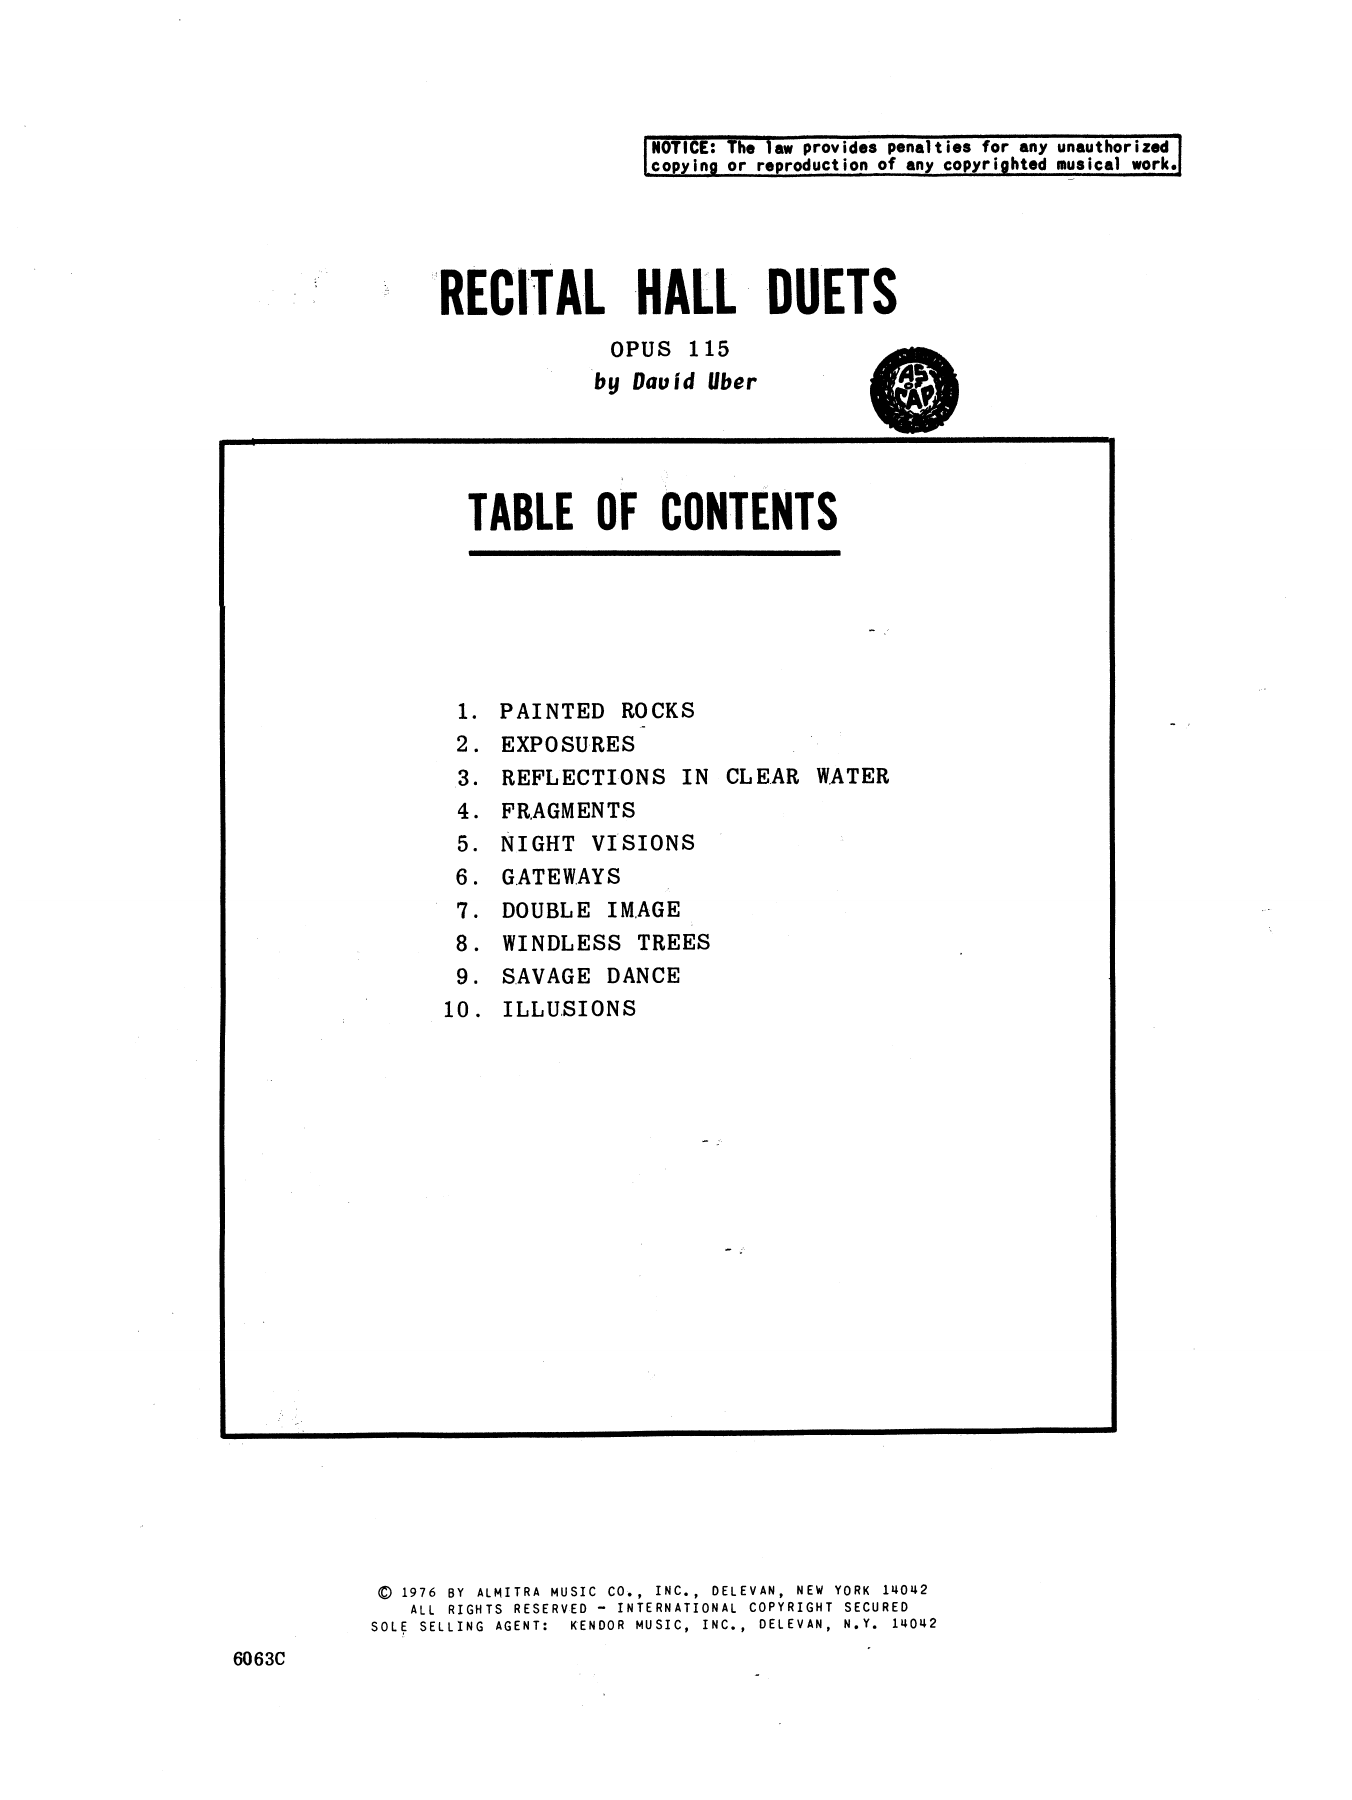 Recital Hall Duets sheet music